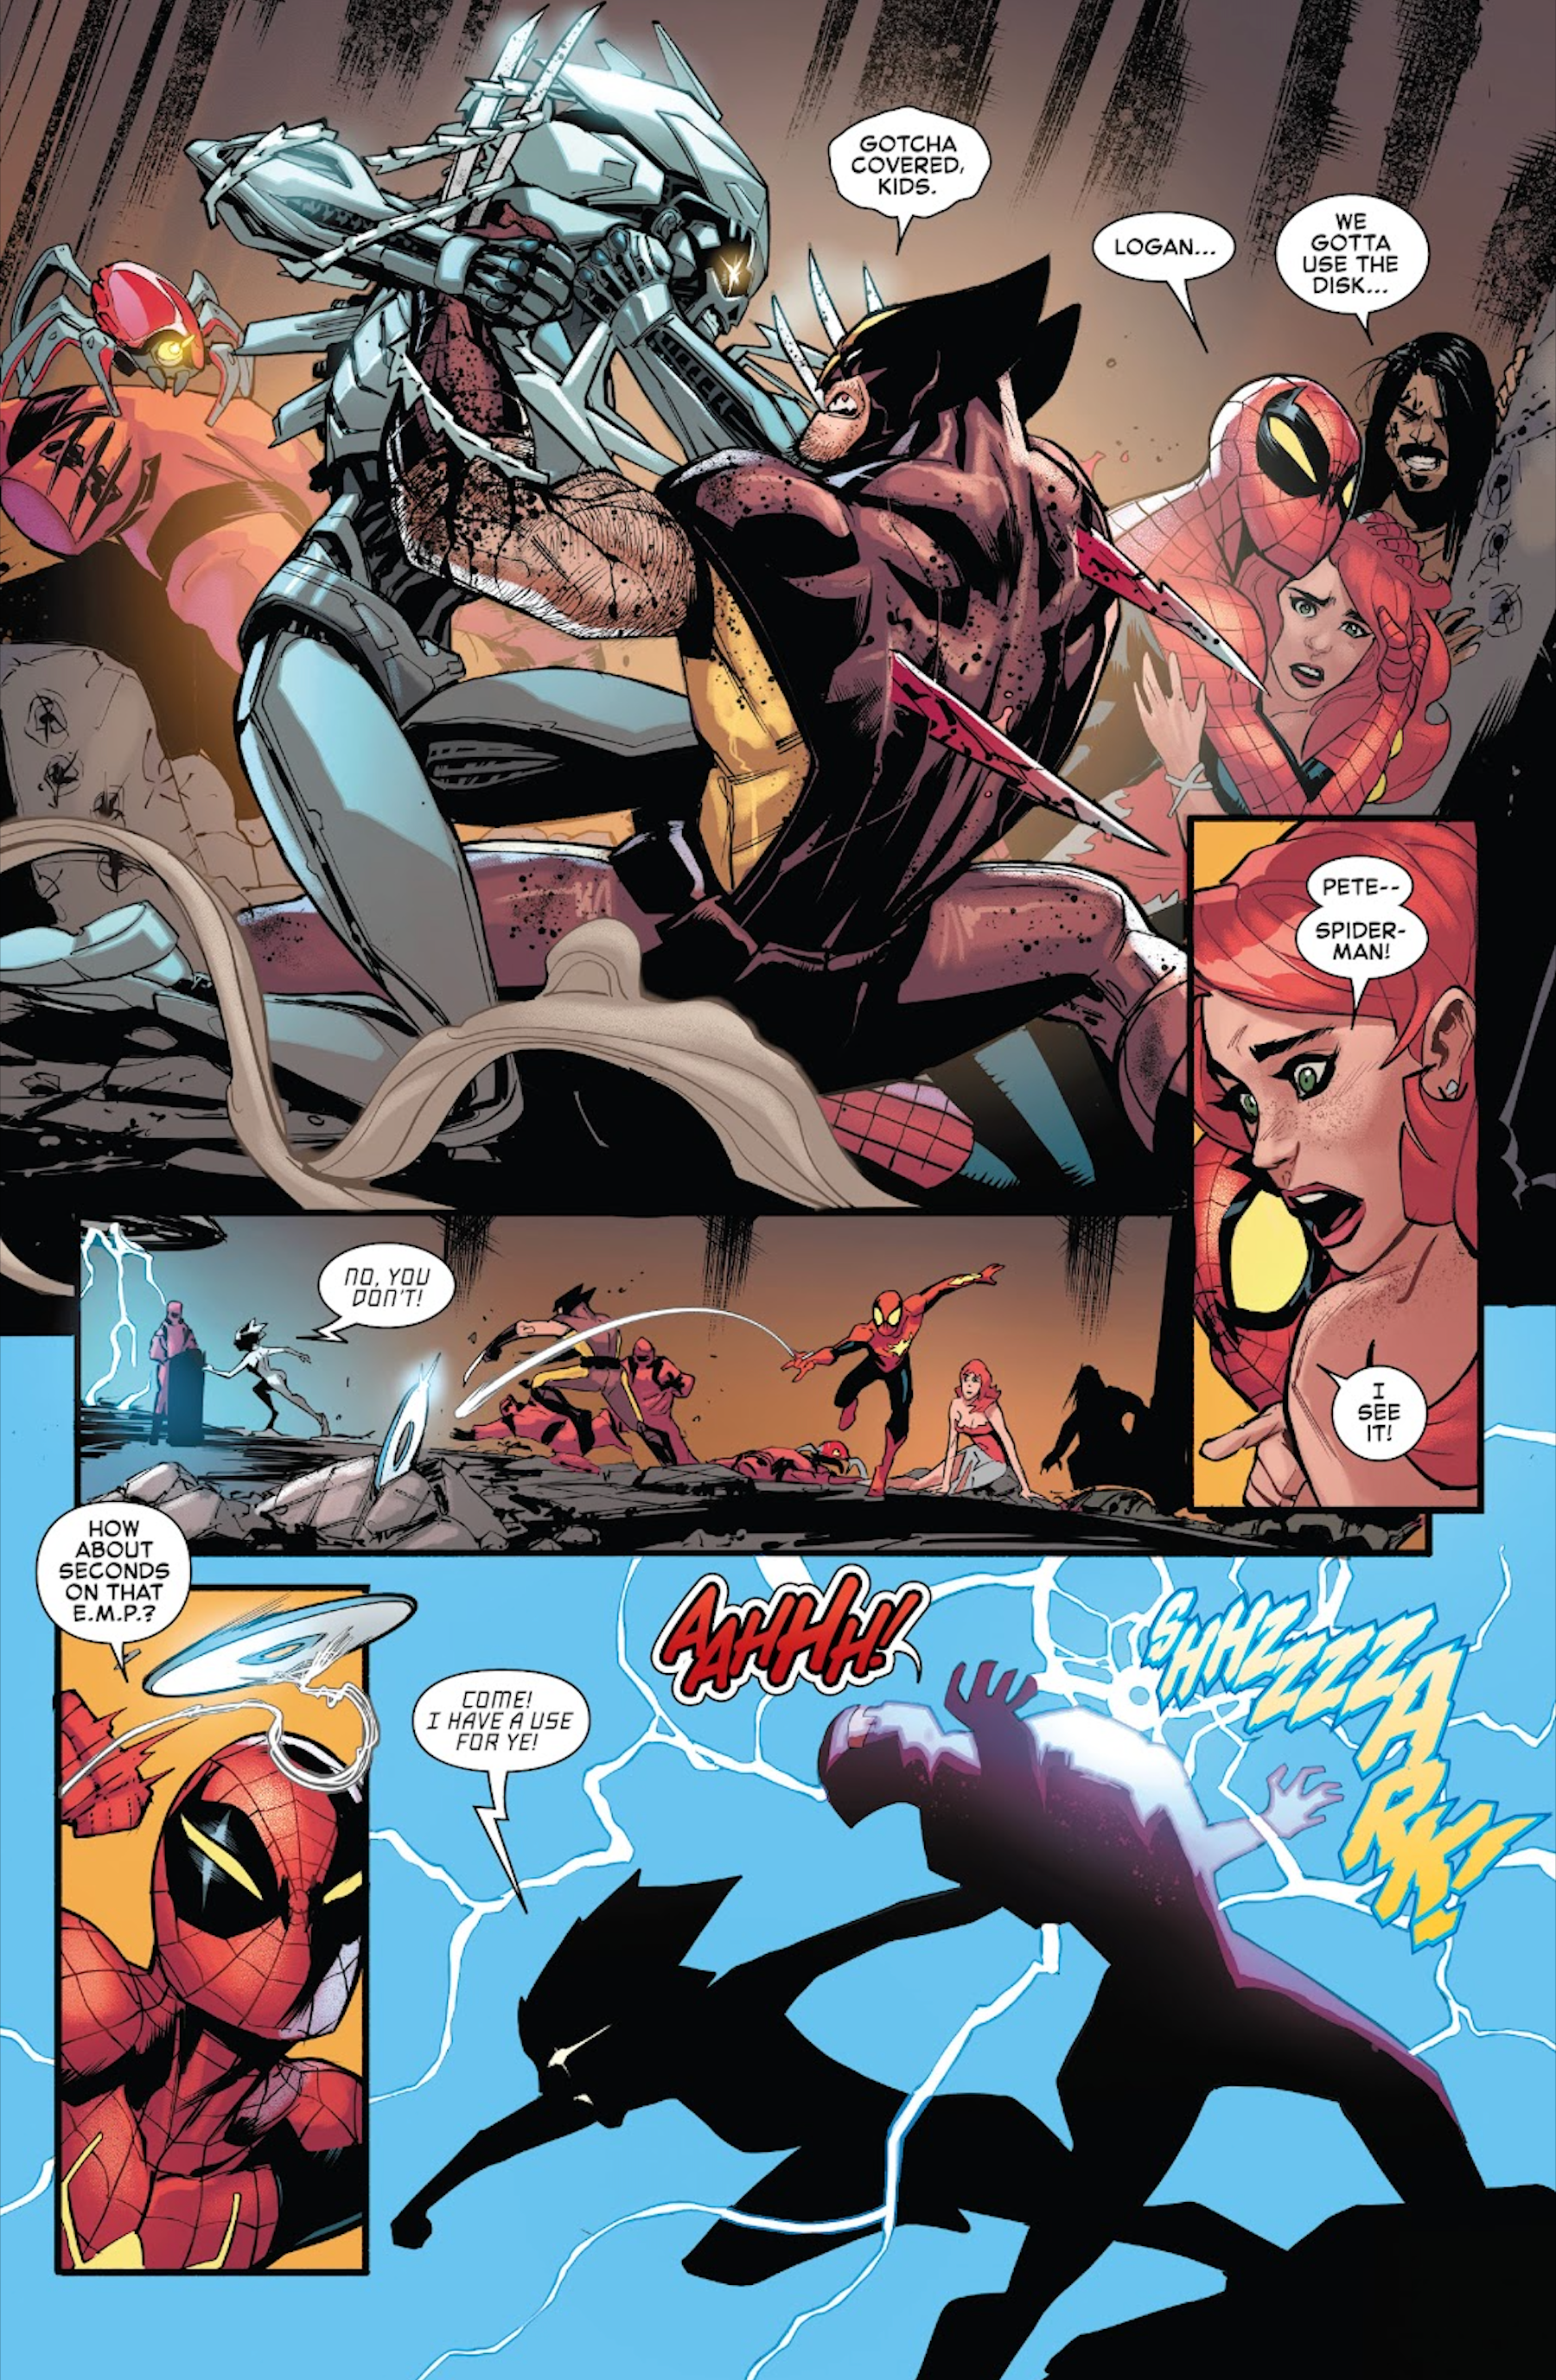 Mary Jane blows Spider-Man's identity